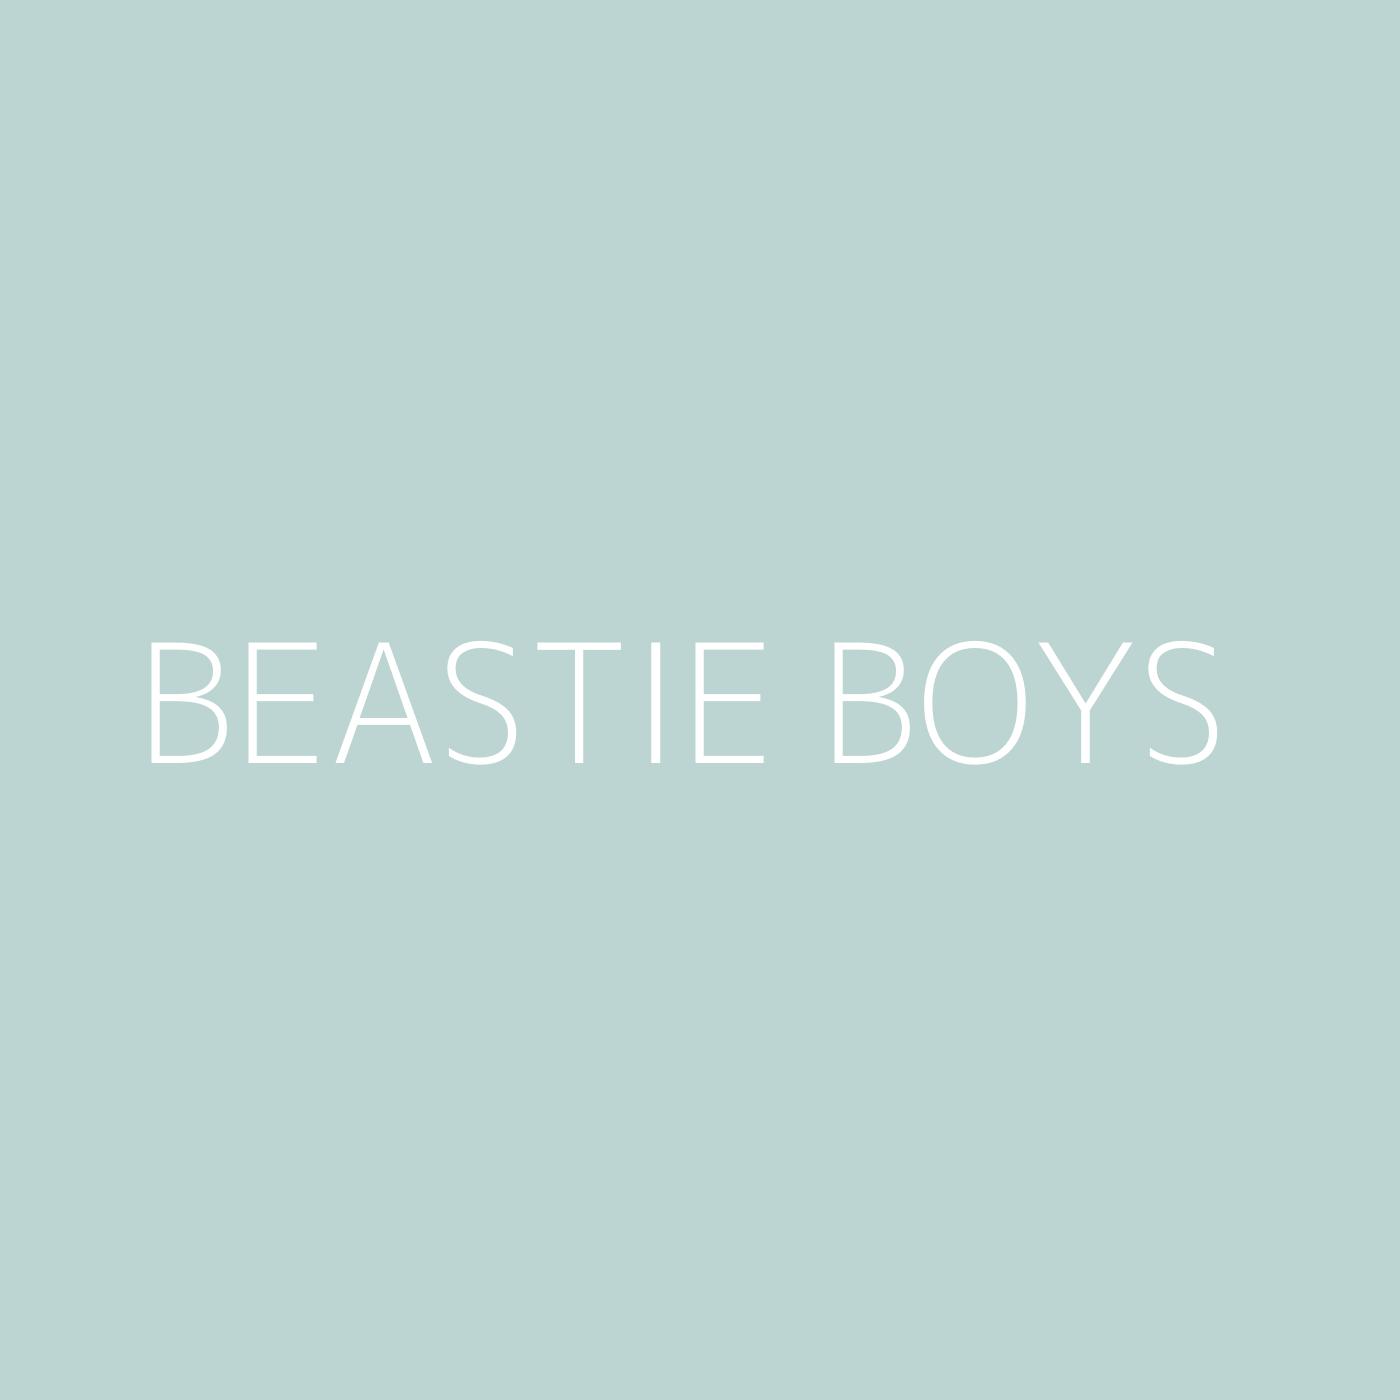 Beastie Boys Playlist Artwork